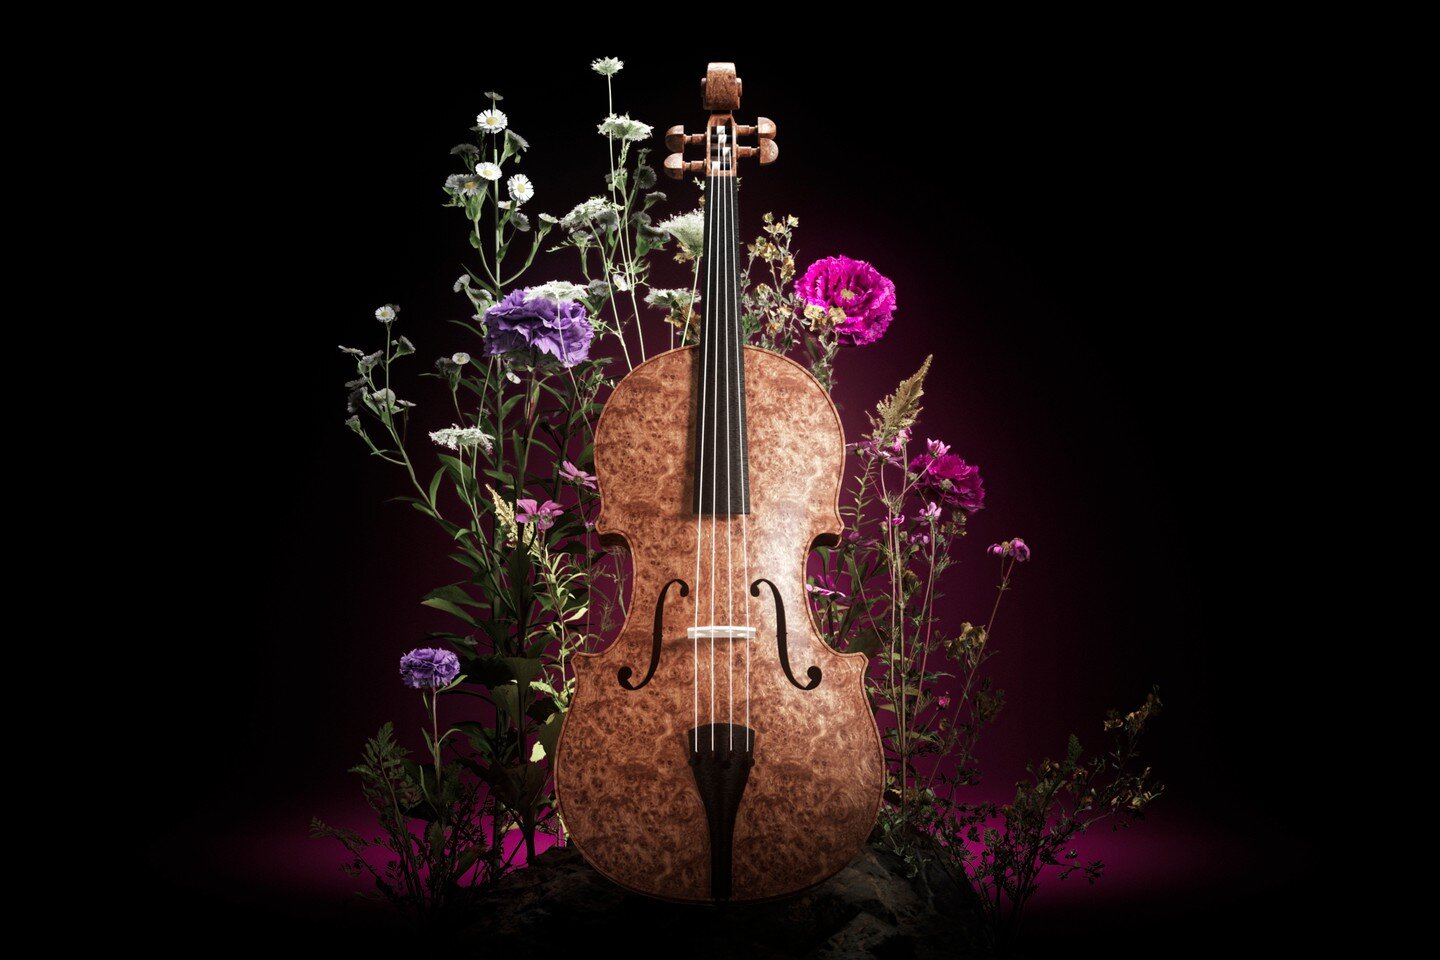 Rendered in 3DS Max using Vray

#cgi #render #freelance #yyc #3dartist #3dart #flowers #violin #music